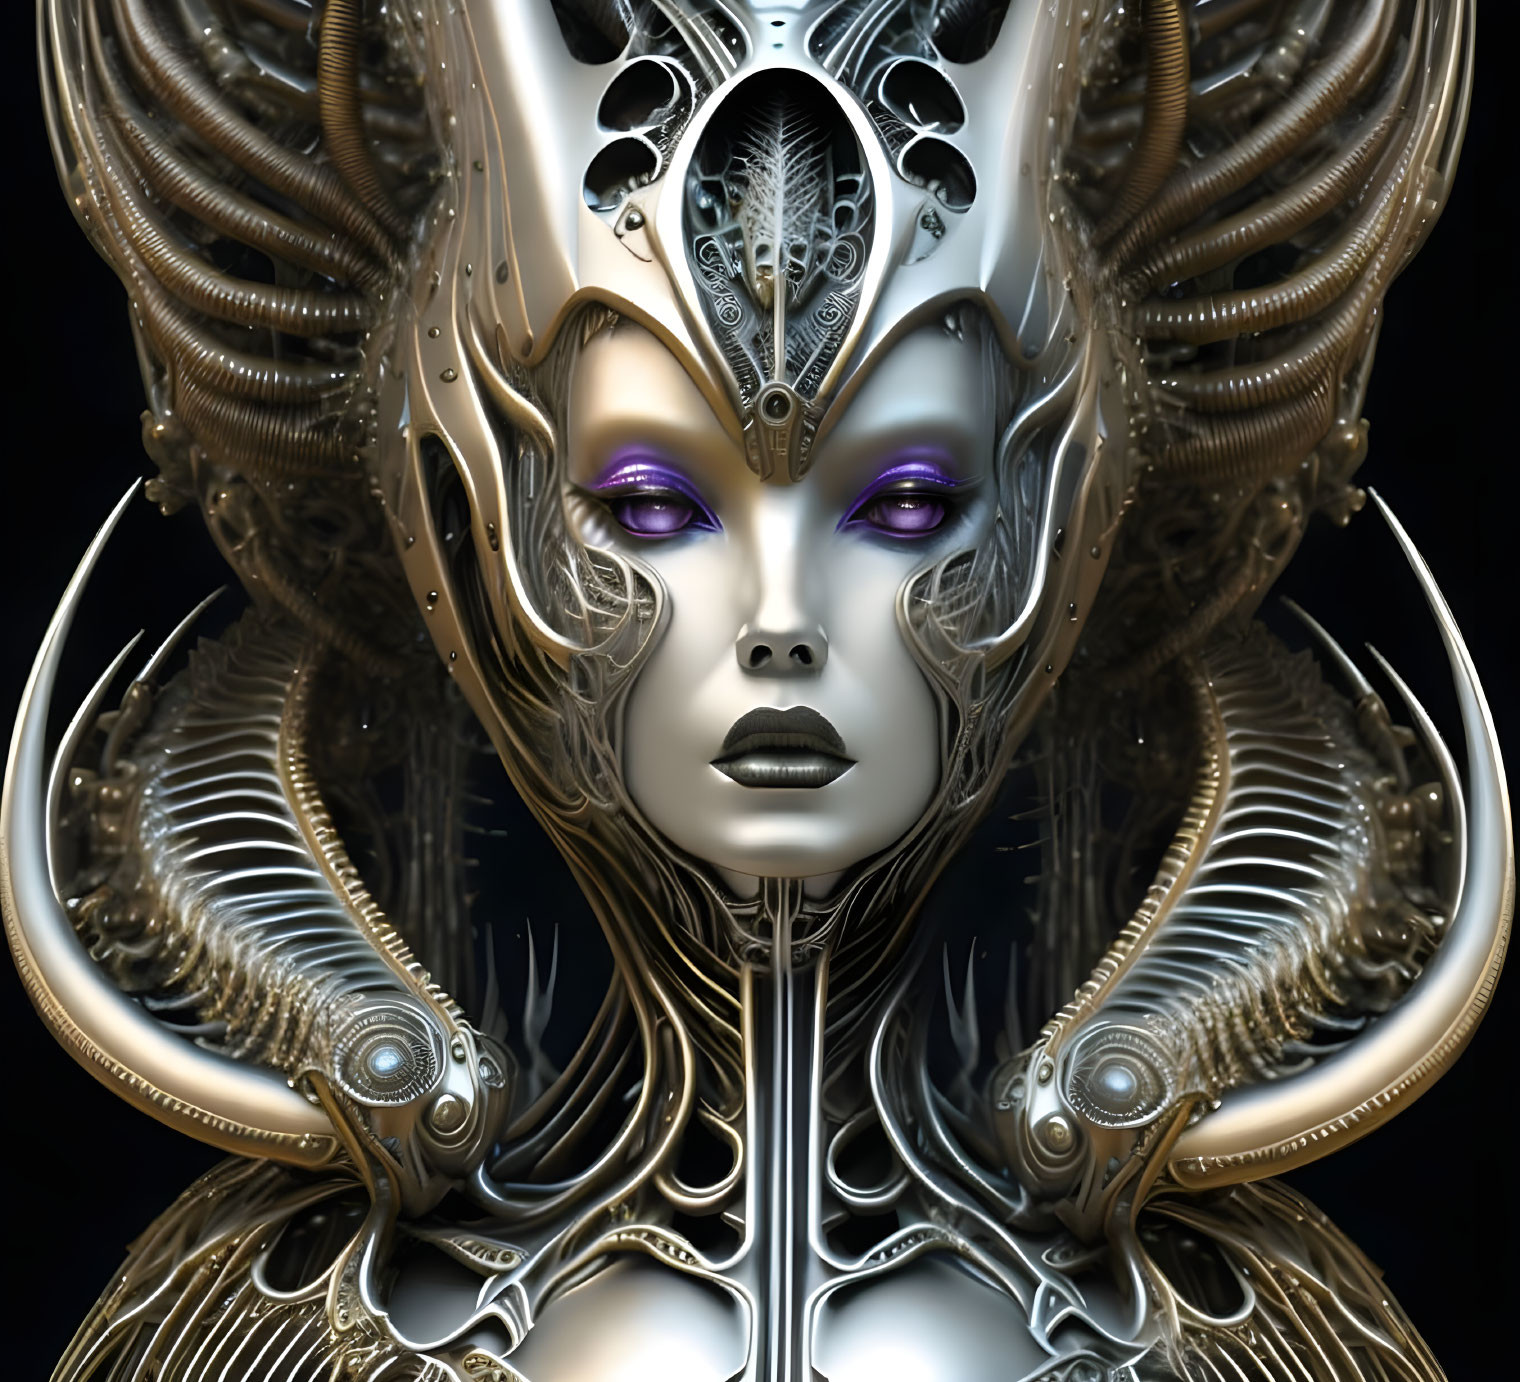 Detailed Futuristic Digital Artwork of Female Figure with Metallic Headgear